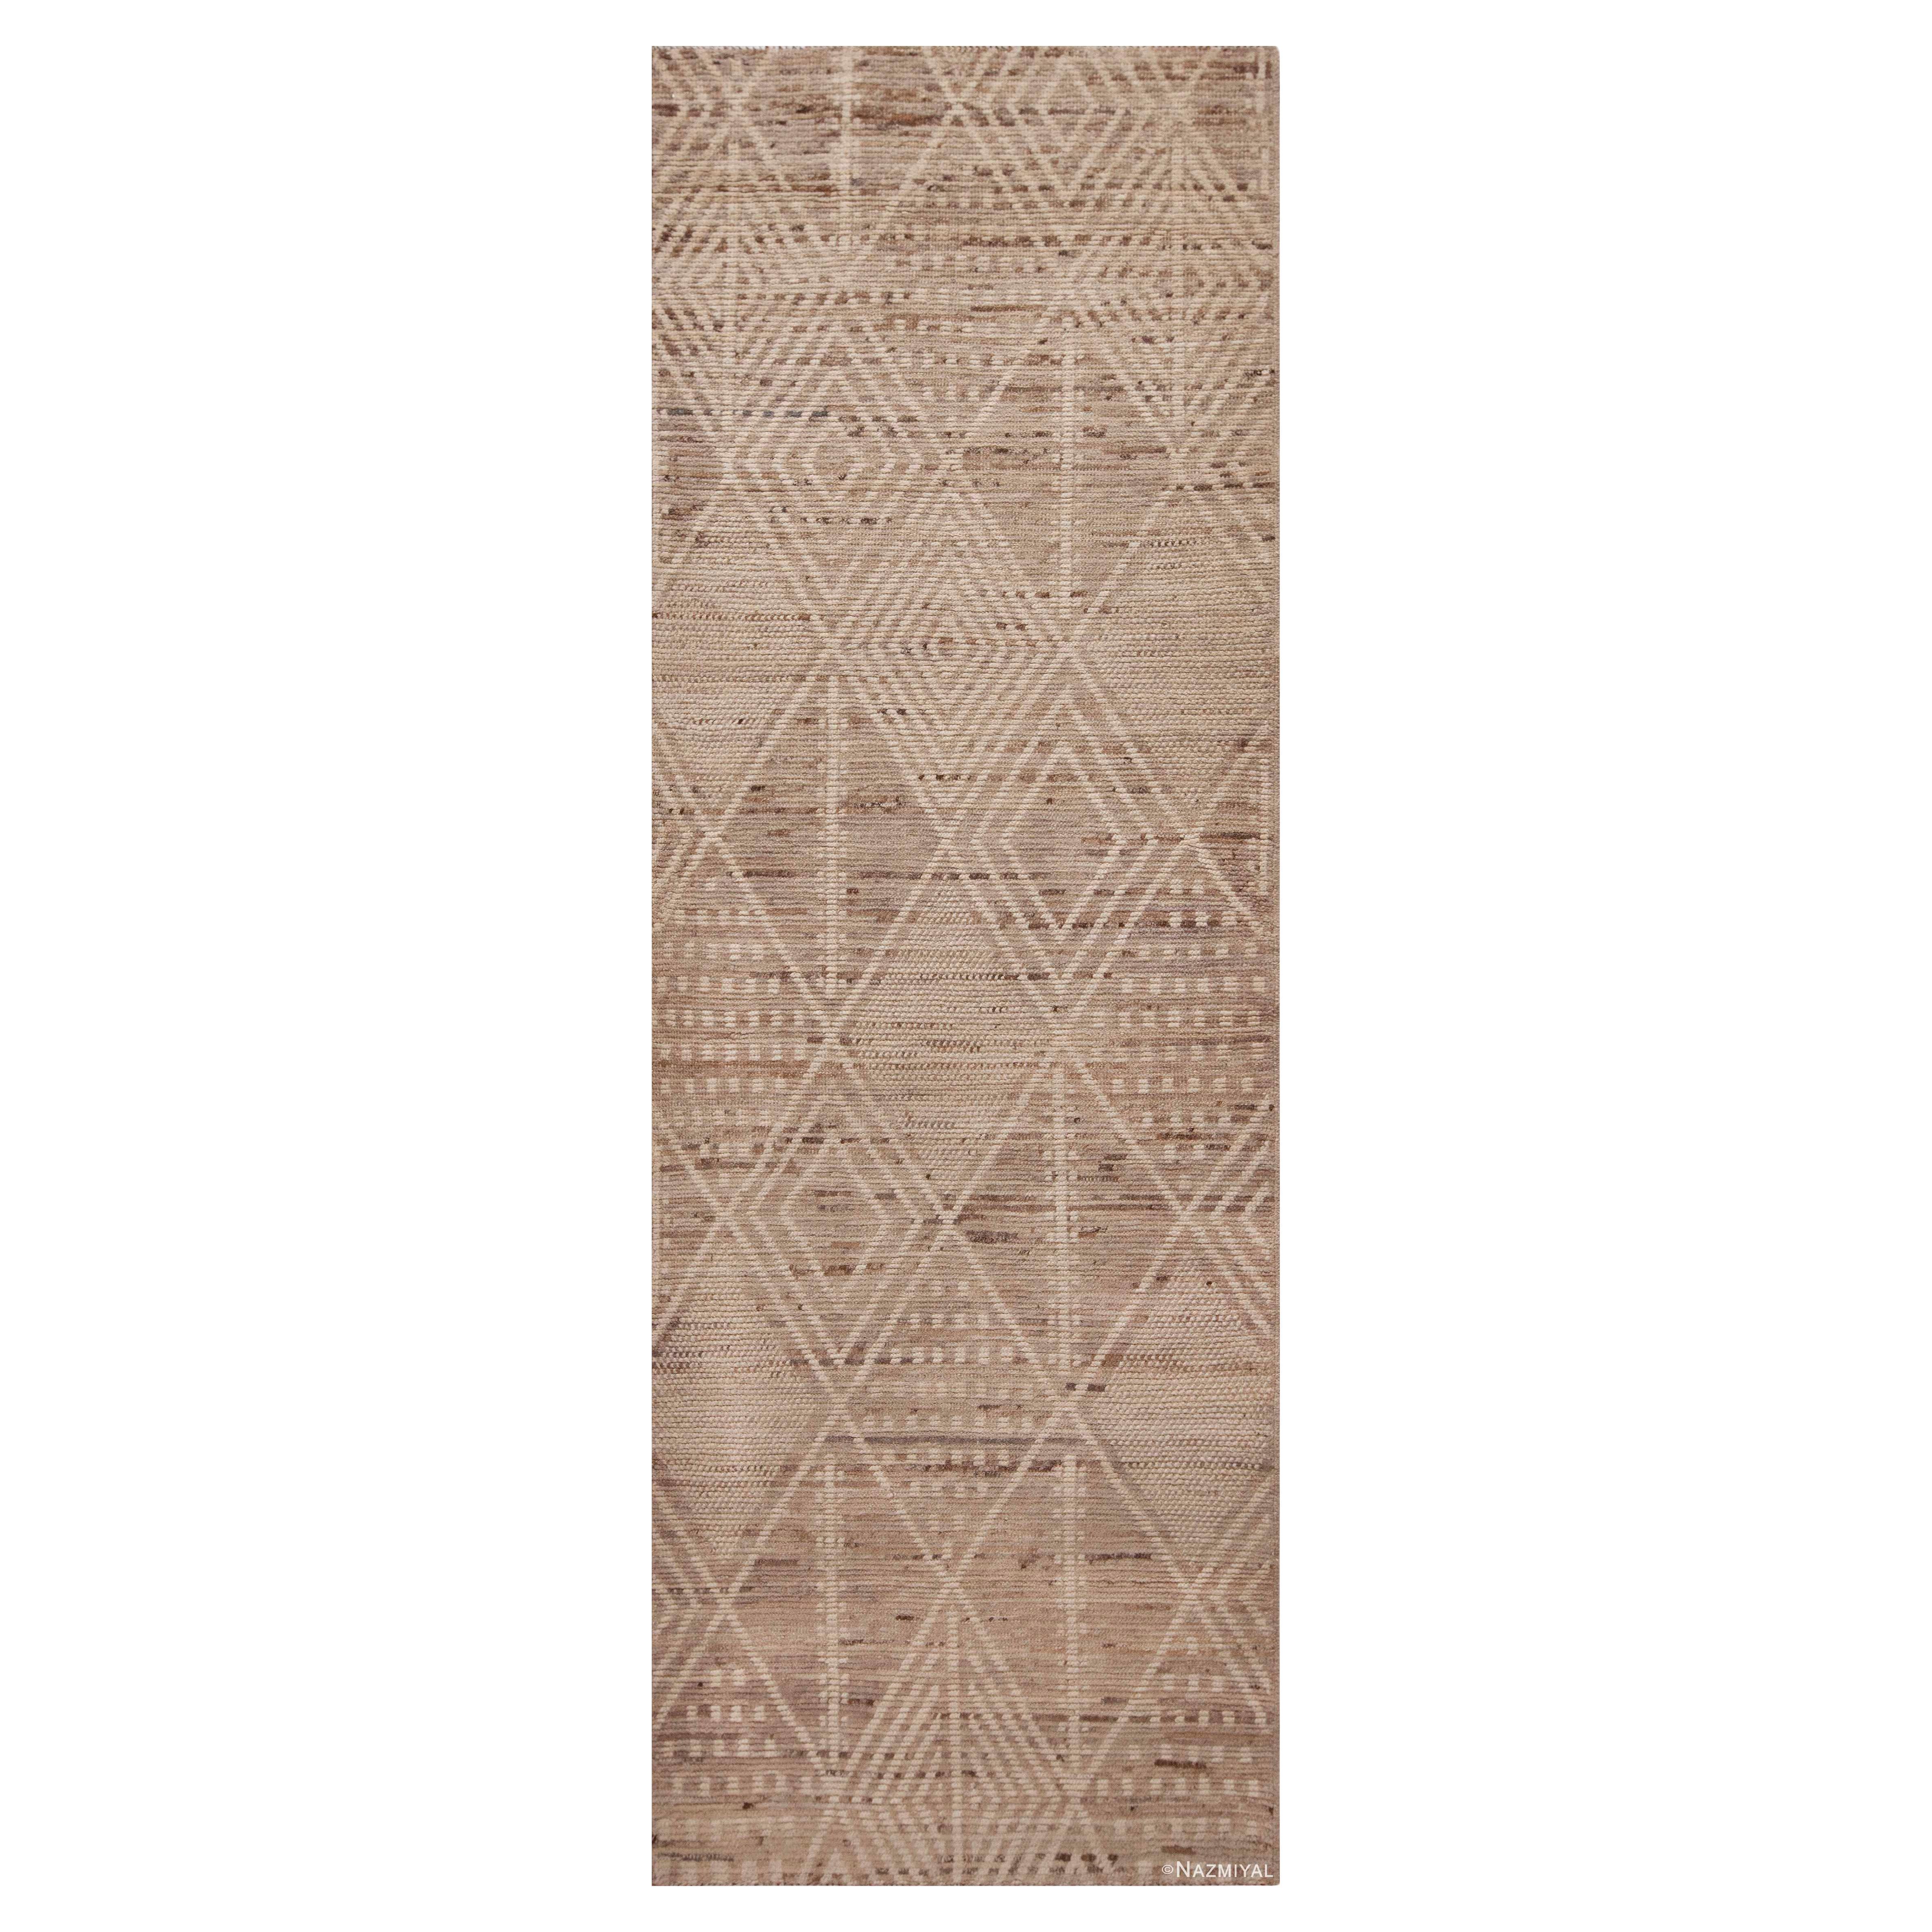 Nazmiyal Collection Tribal Modern Moroccan Berber Design Runner Rug 3'6" x 10'6 For Sale